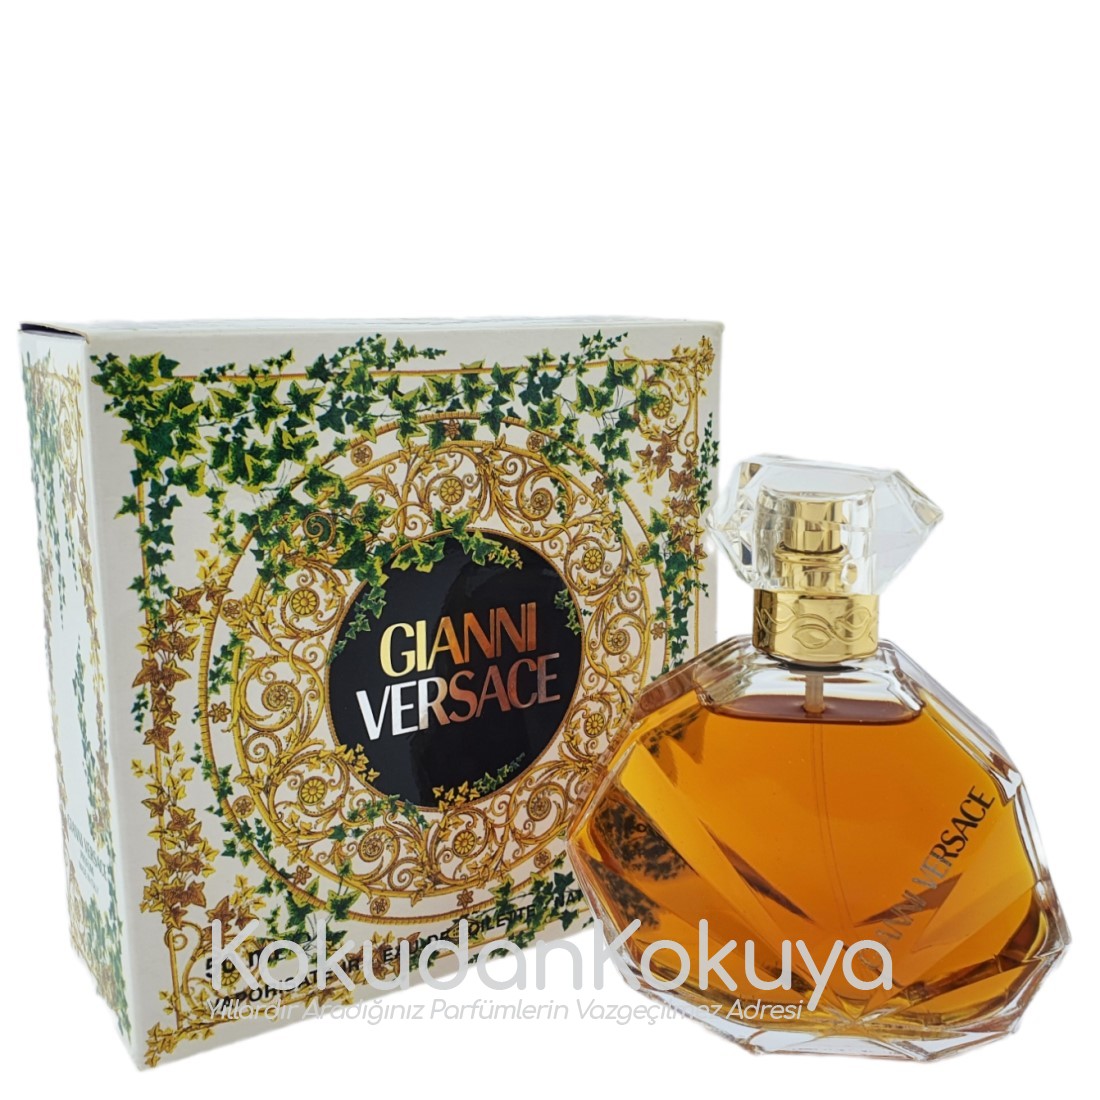 VERSACE Gianni Versace for Women (Vintage) Parfüm Kadın 50ml Eau De Toilette (EDT) Sprey 